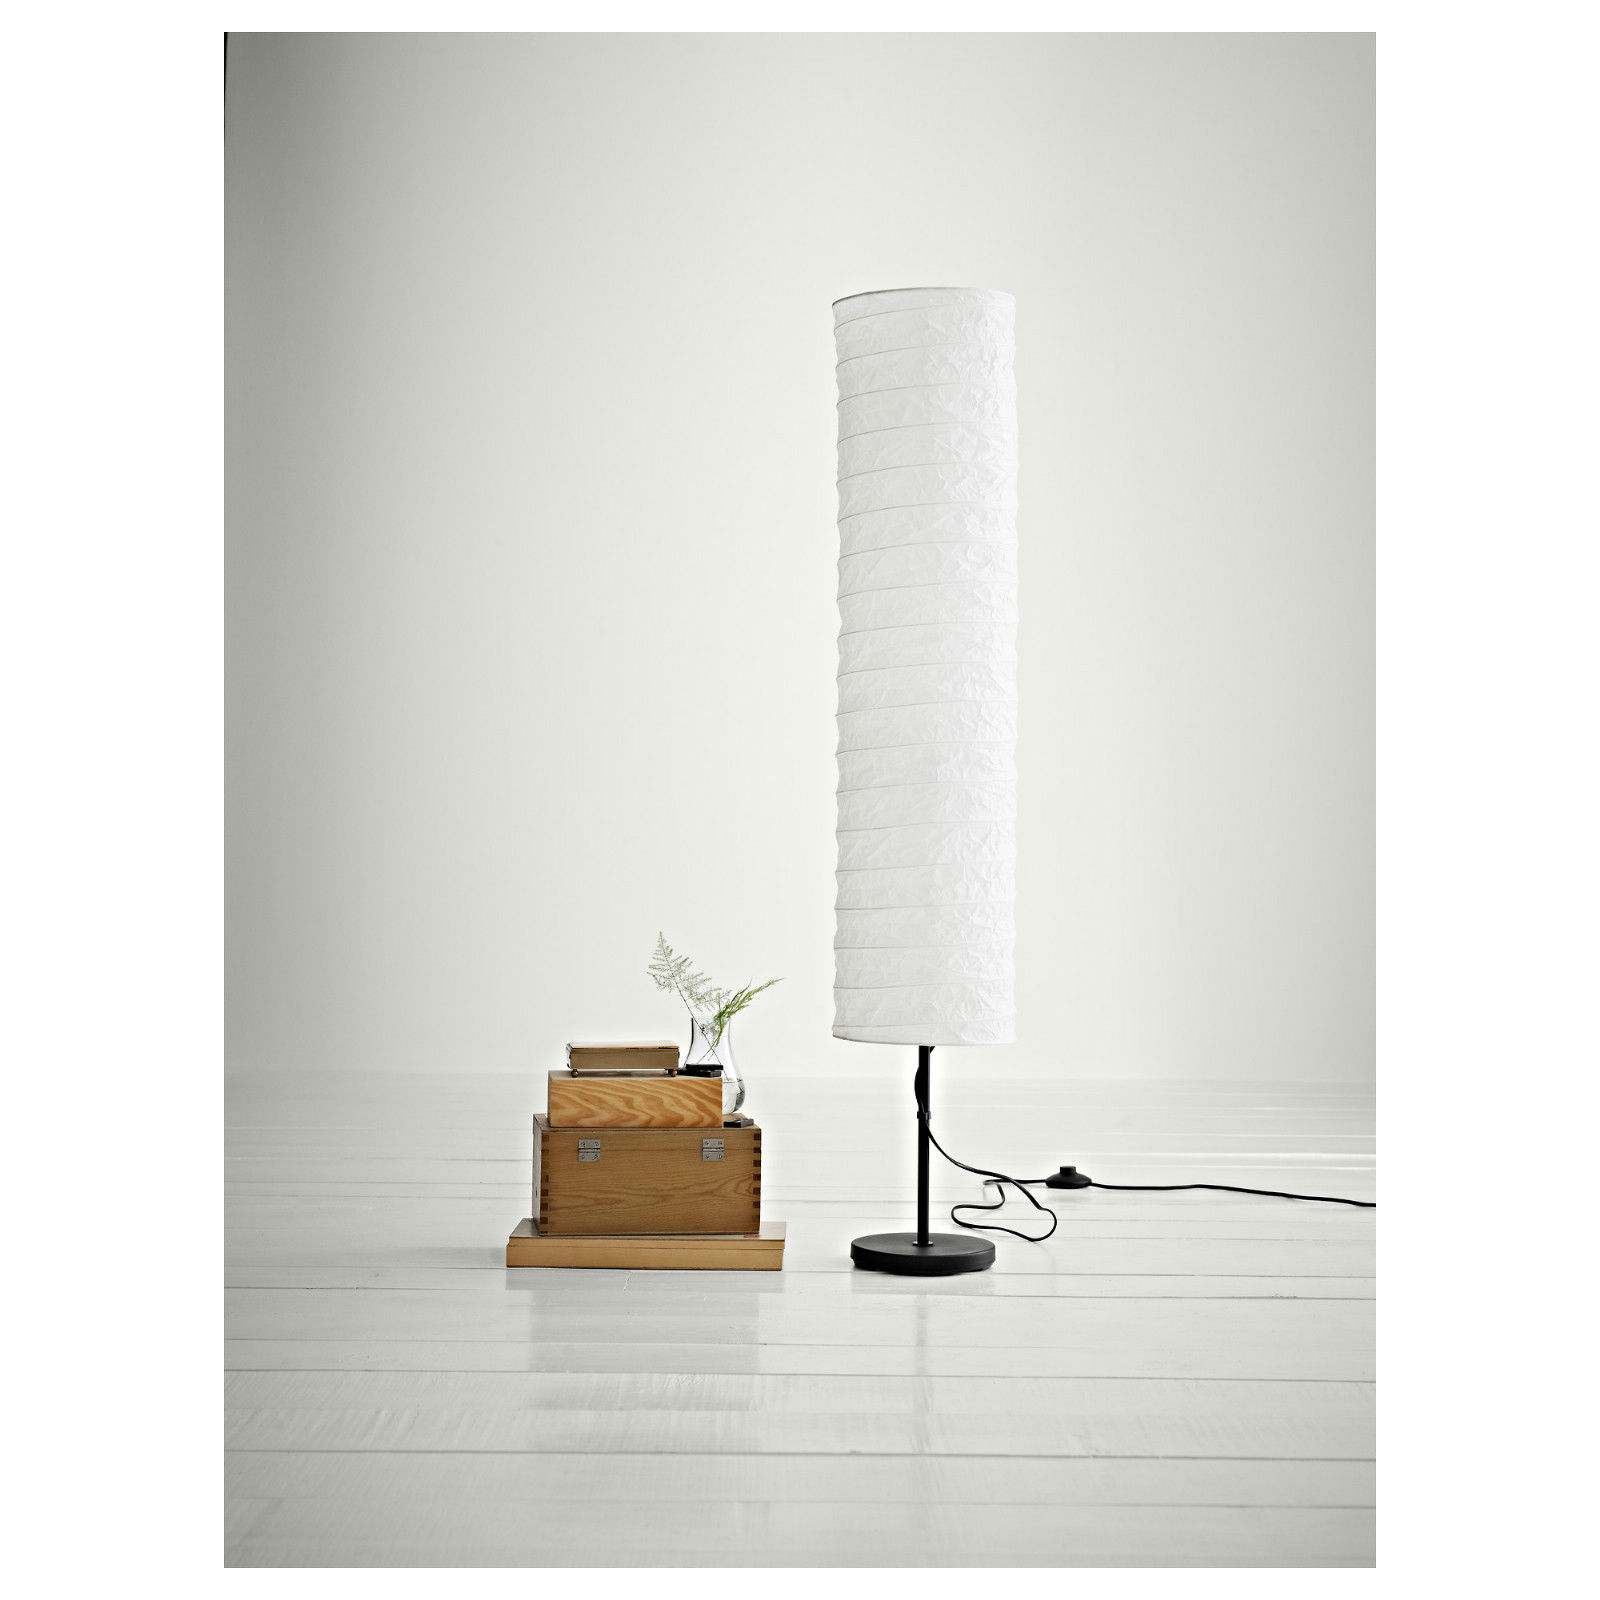 IKEA Holmo Floor Lamp Rice Paper Shade White Light Modern Indoor Soft